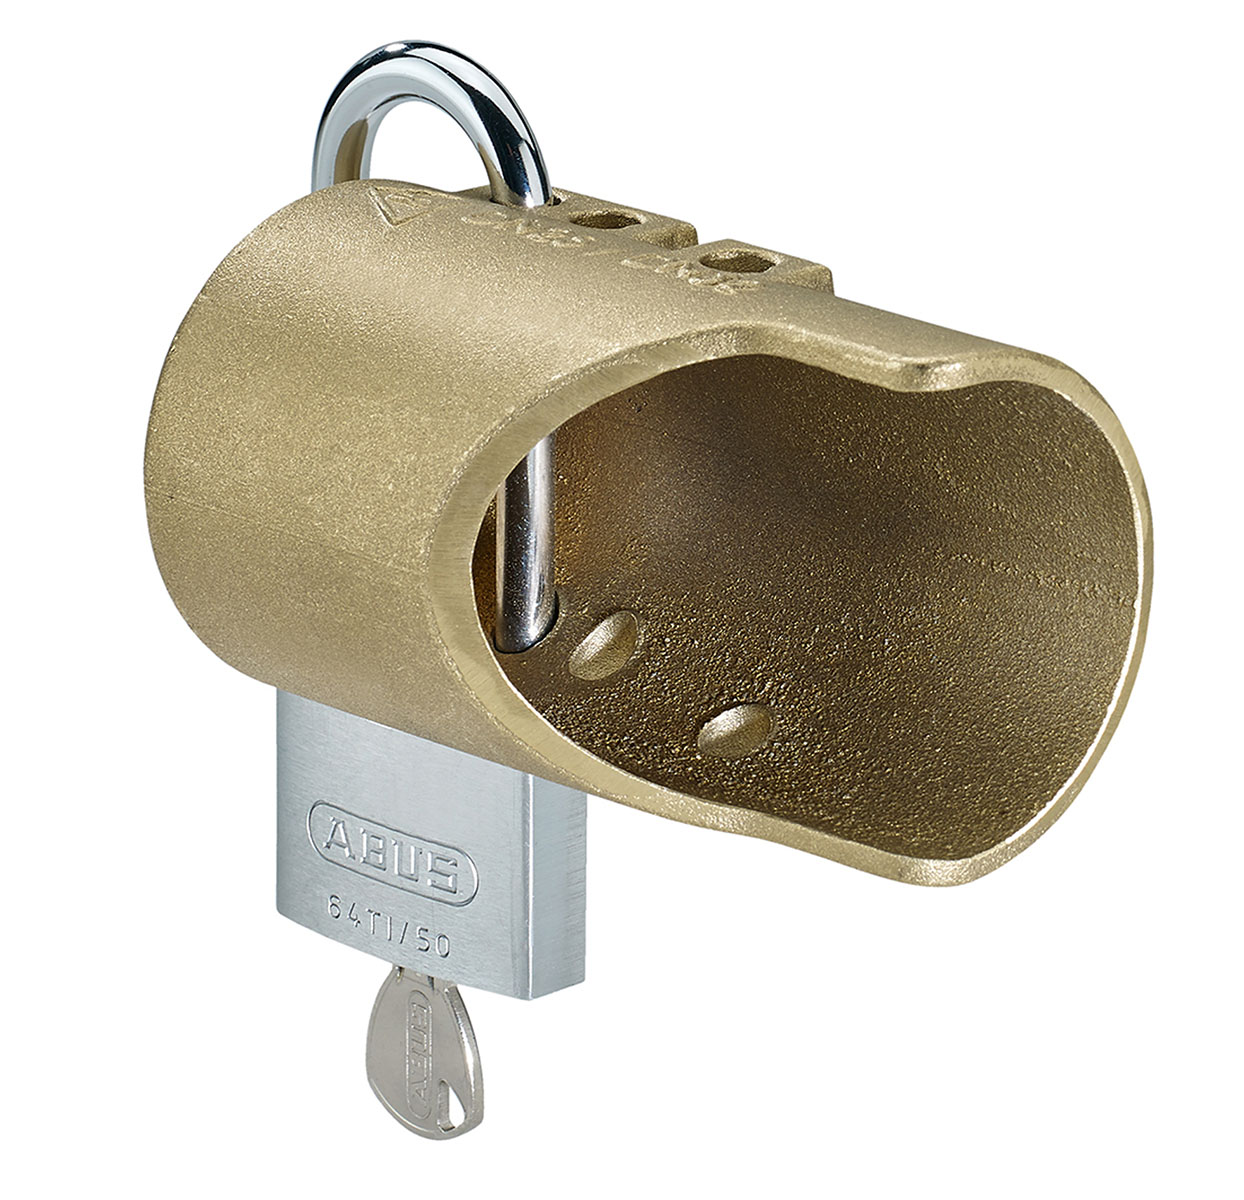 5057250 - Aqualock lockable fuse component